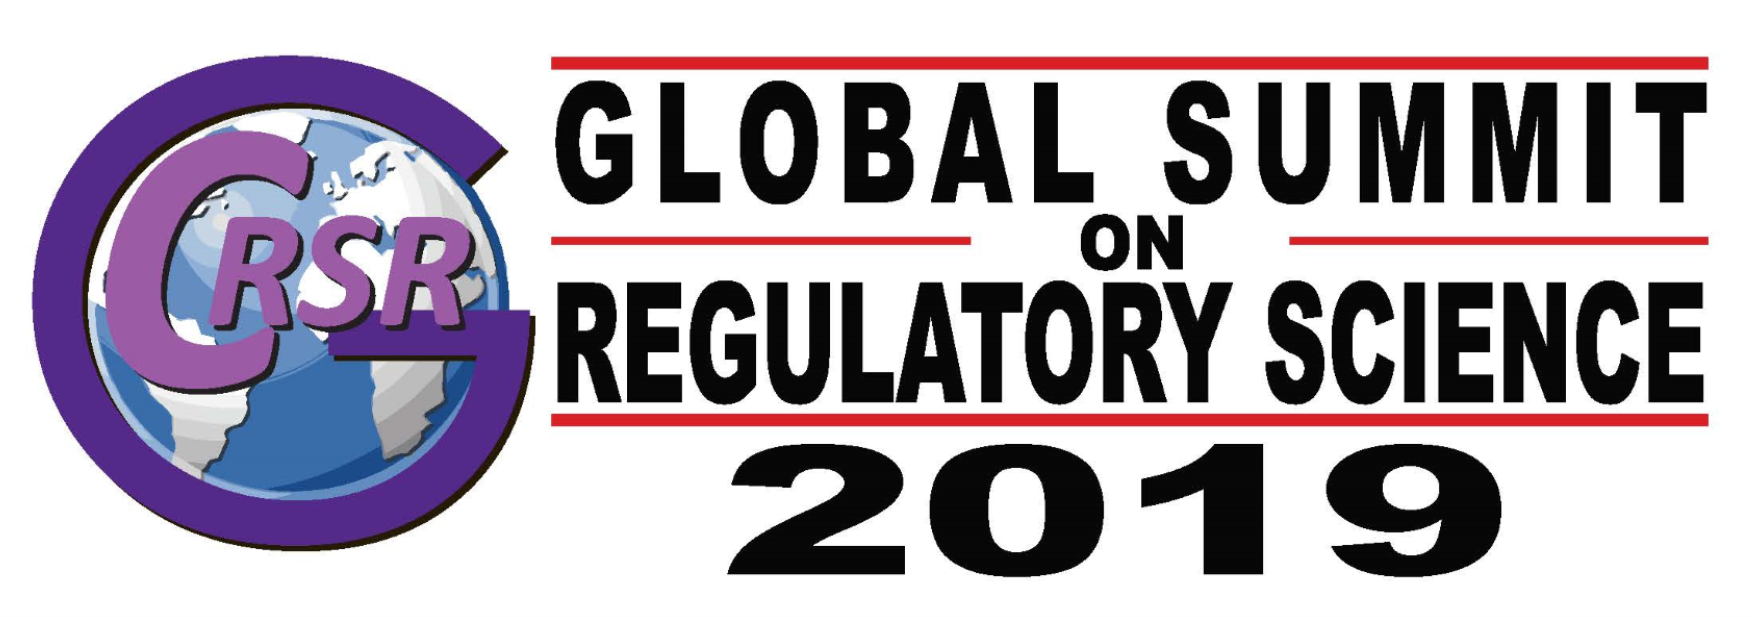 Global Summit on Regulatory Science 2019 logo